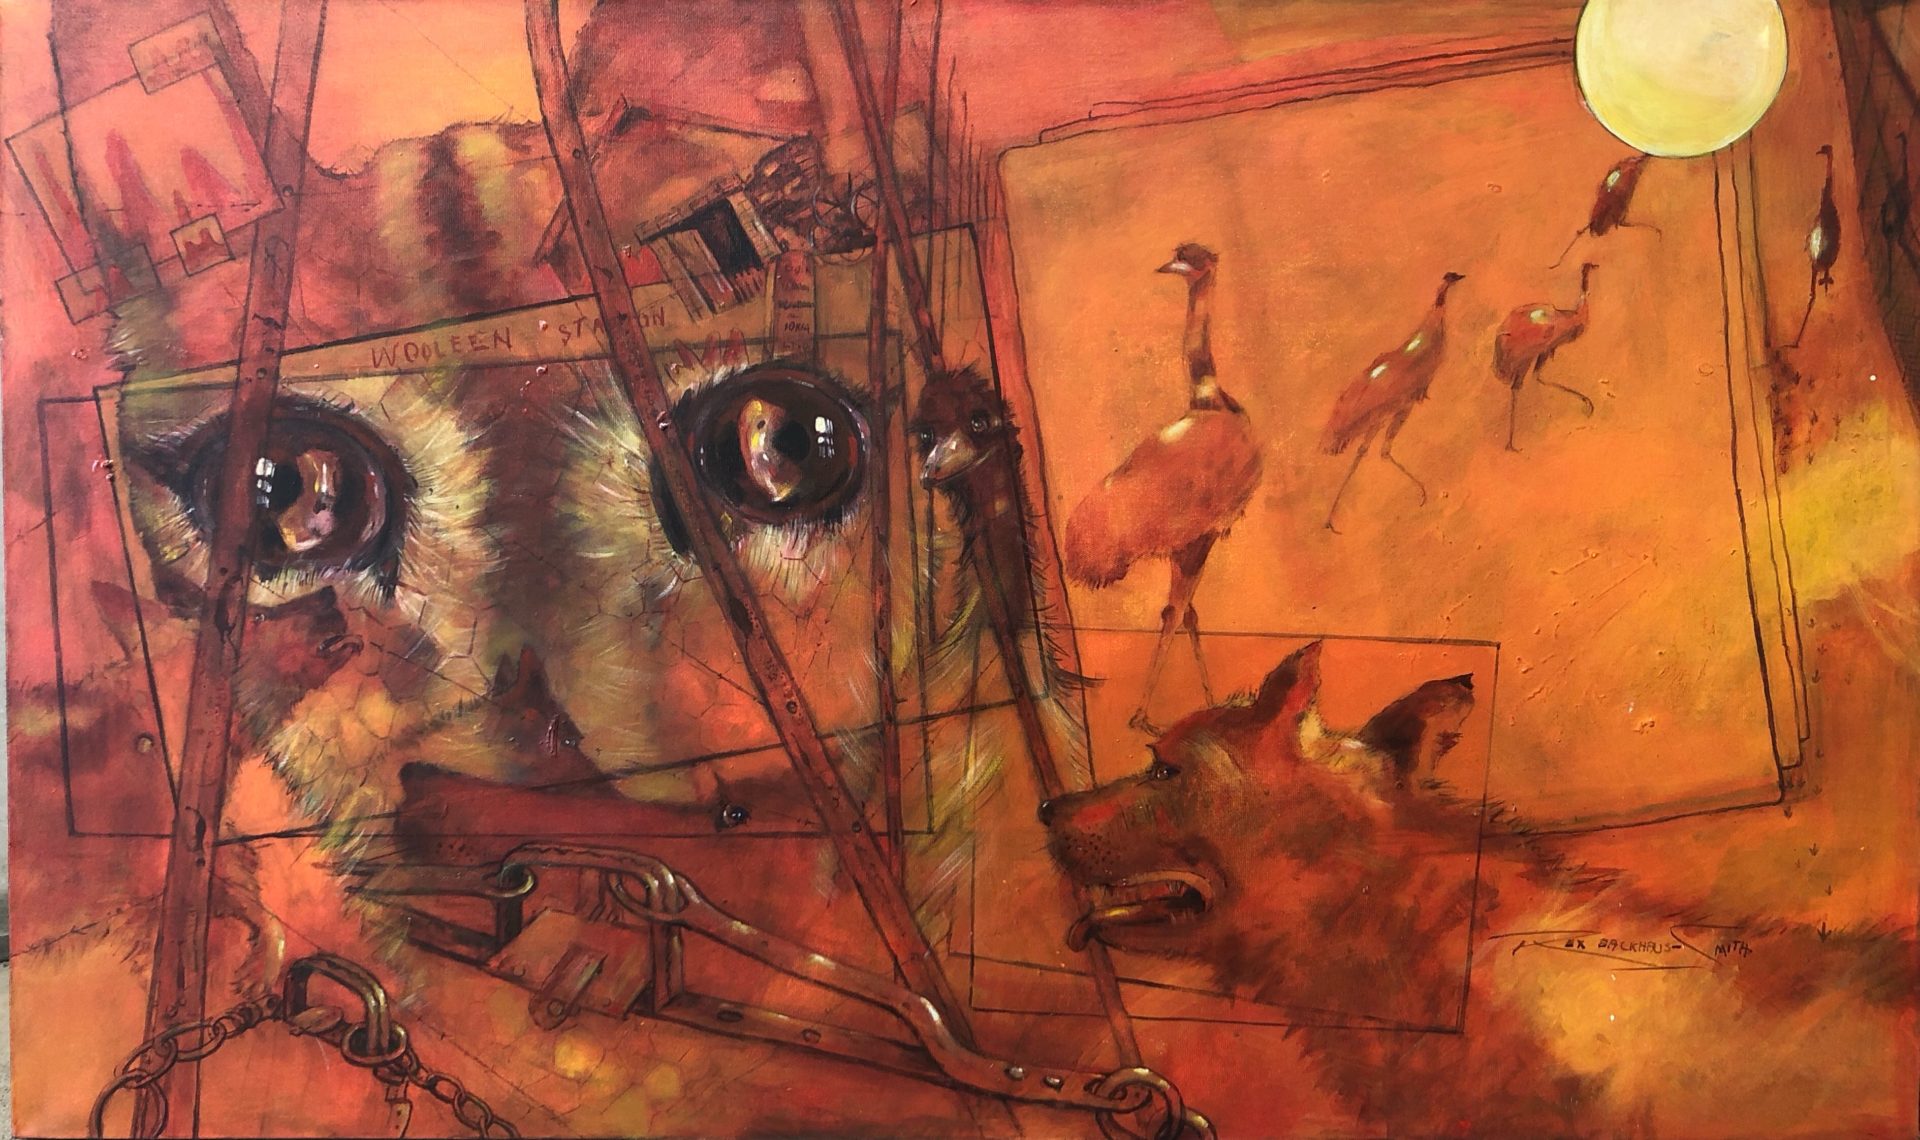 Dingo | Rex Backhaus-Smith | Acrylic on canvas | 91 x 152.5 cm | $12,000